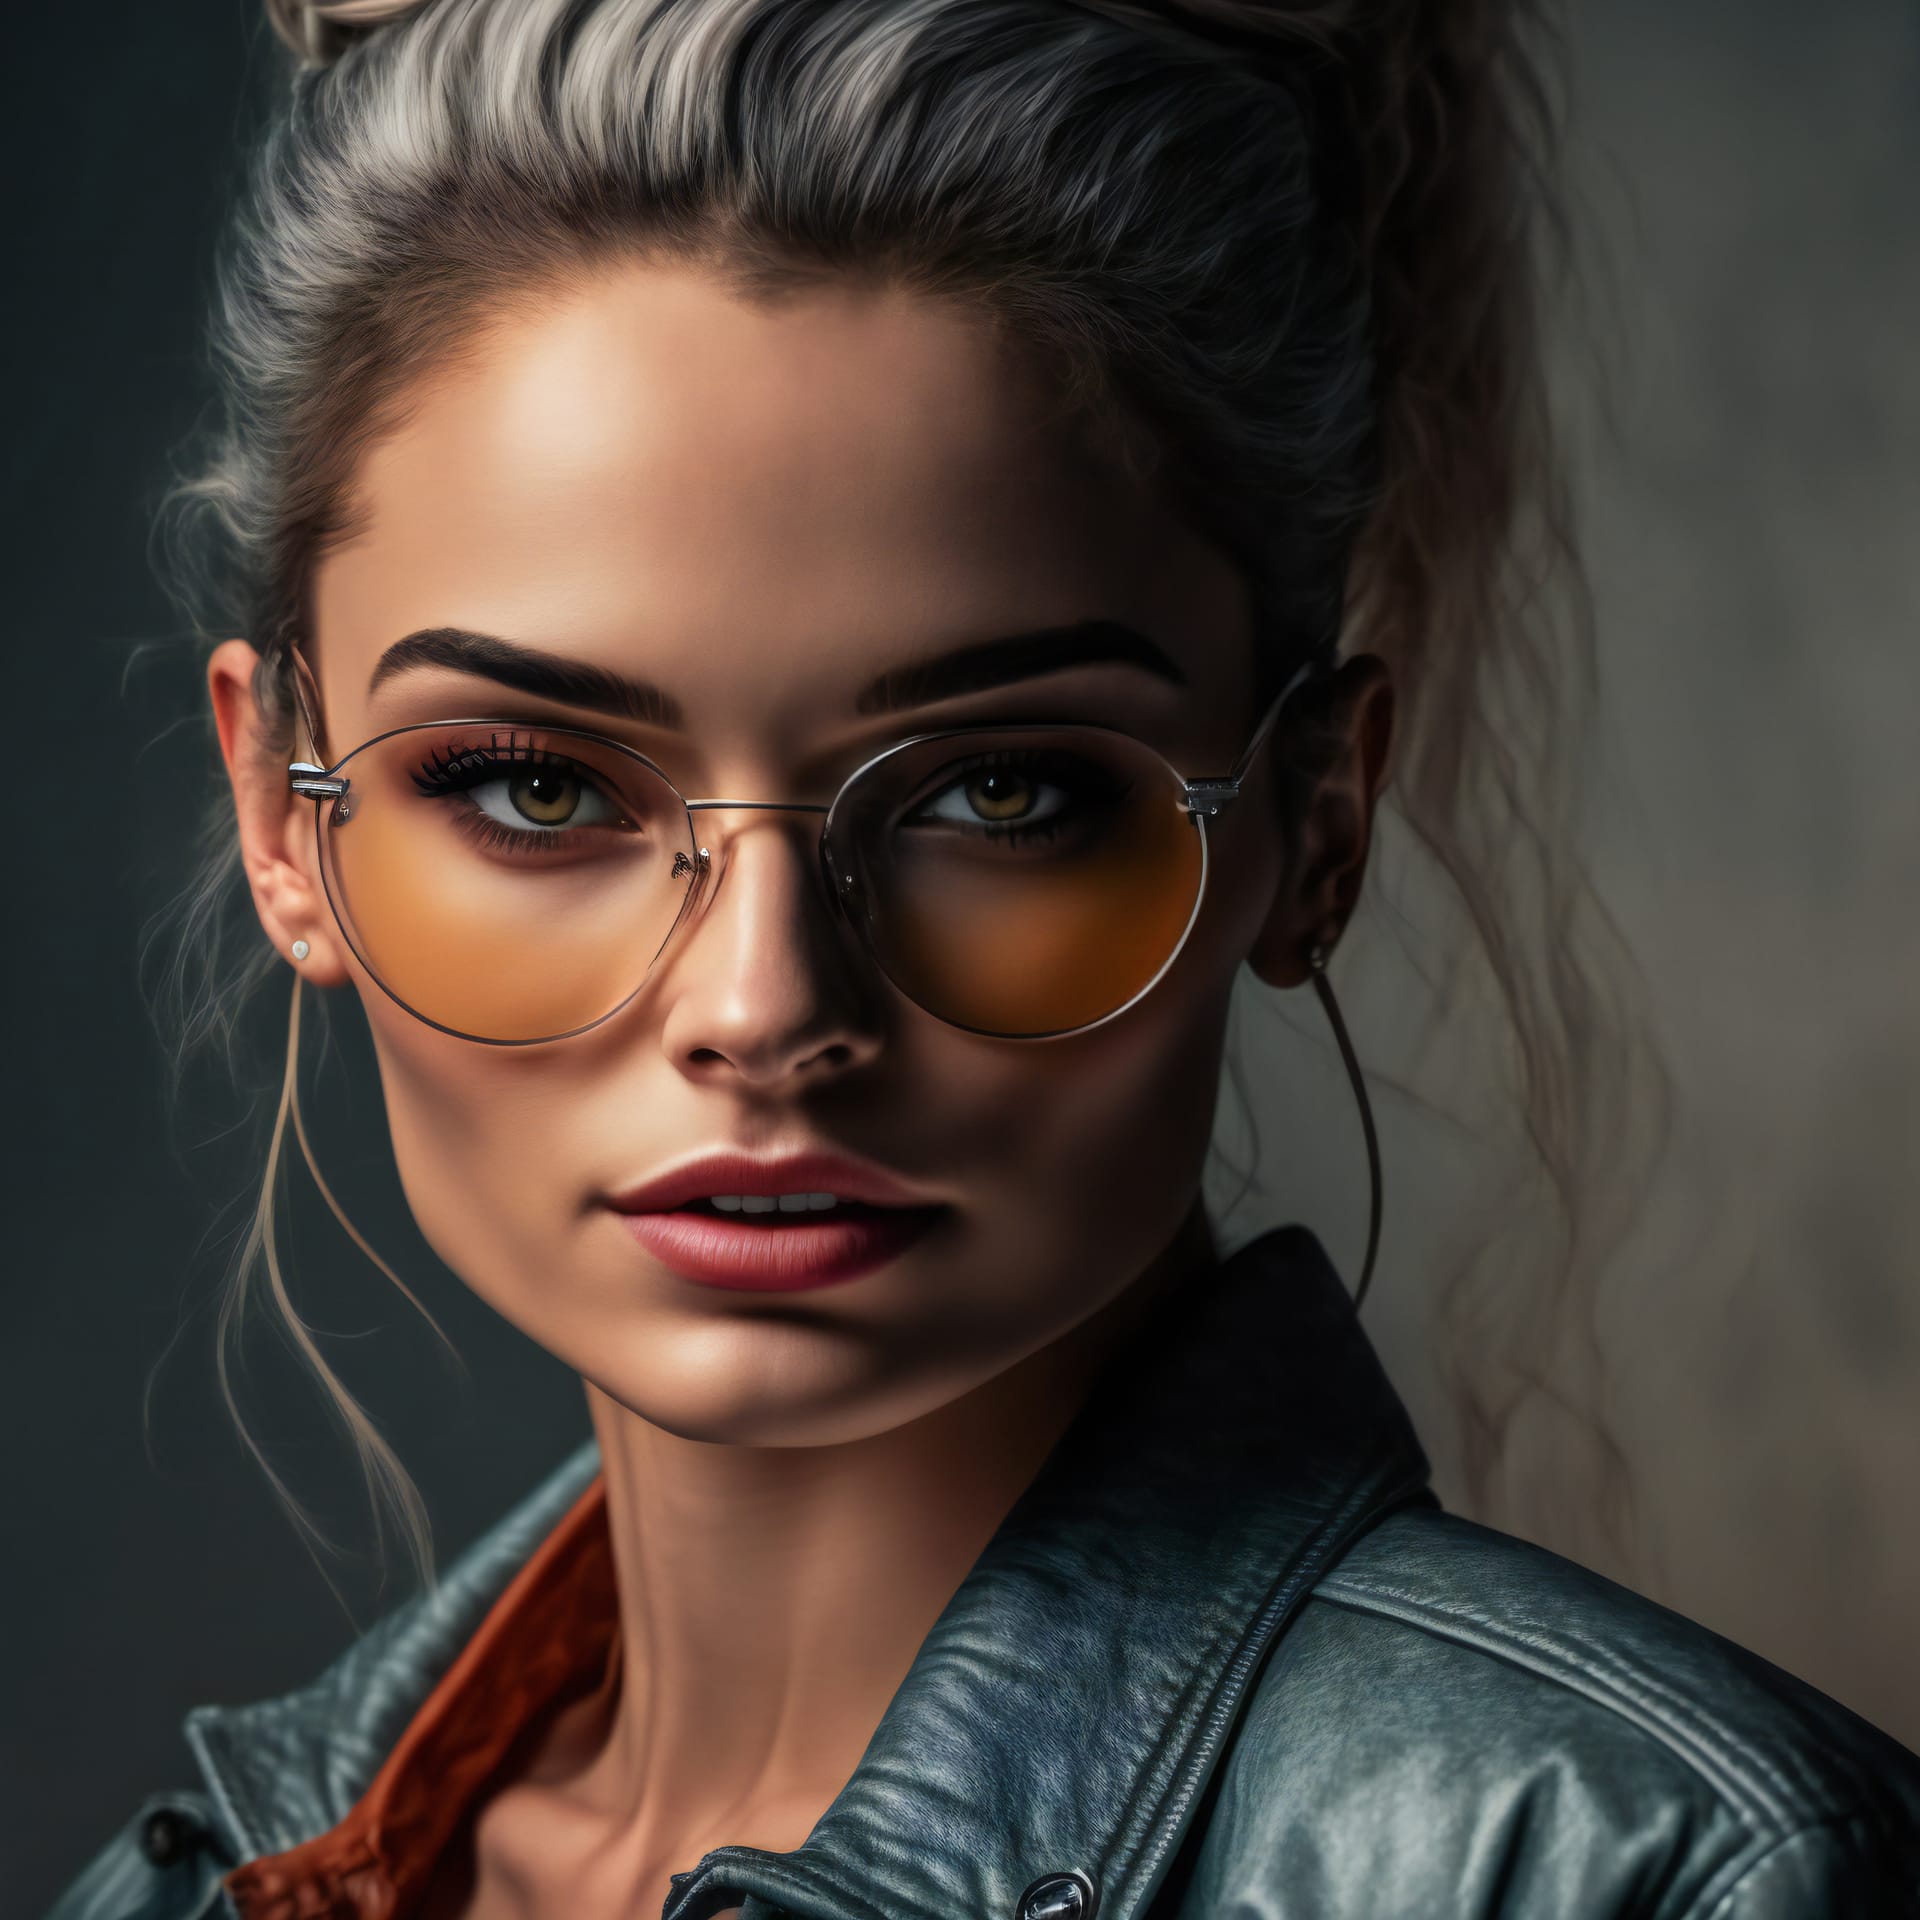 Digital painting trendy woman with sunglass digital illustration painting